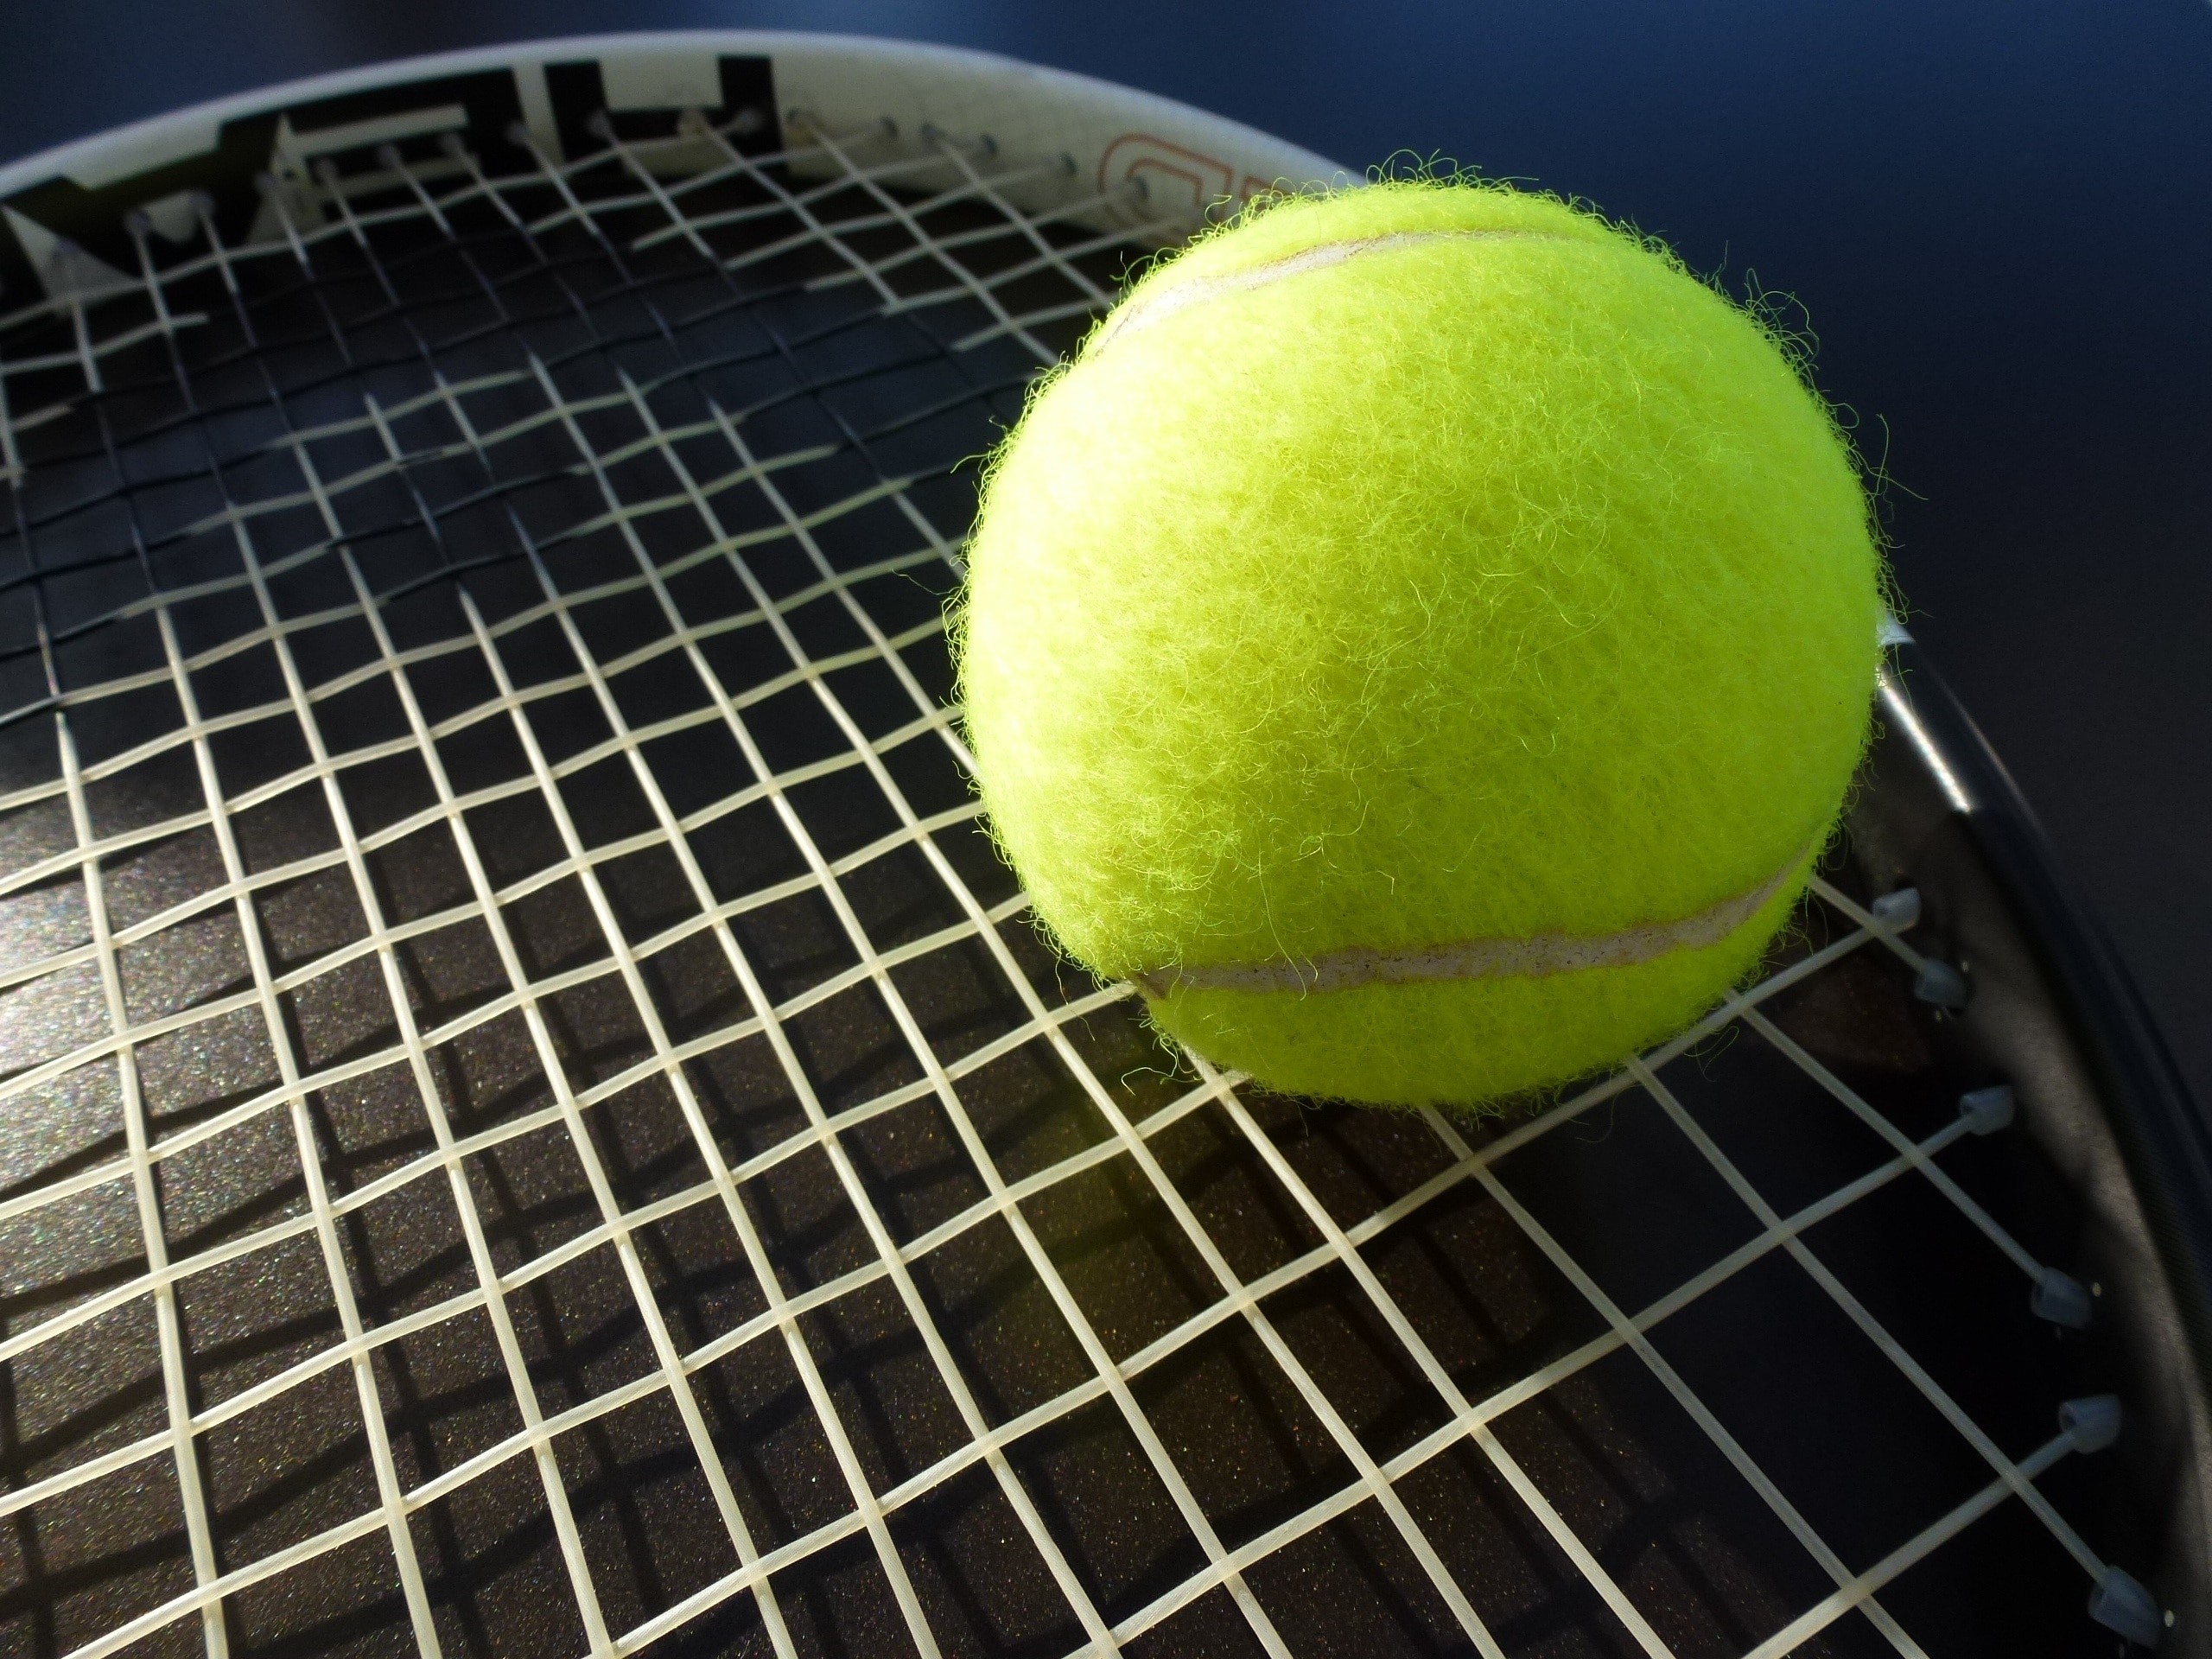 Представьте ядро размером с теннисный мячик. Теннисный мяч Tennis. Теннисный мяч Уимблдон. Теннис корт ракетка мяч. Теннисный мяч на корте.